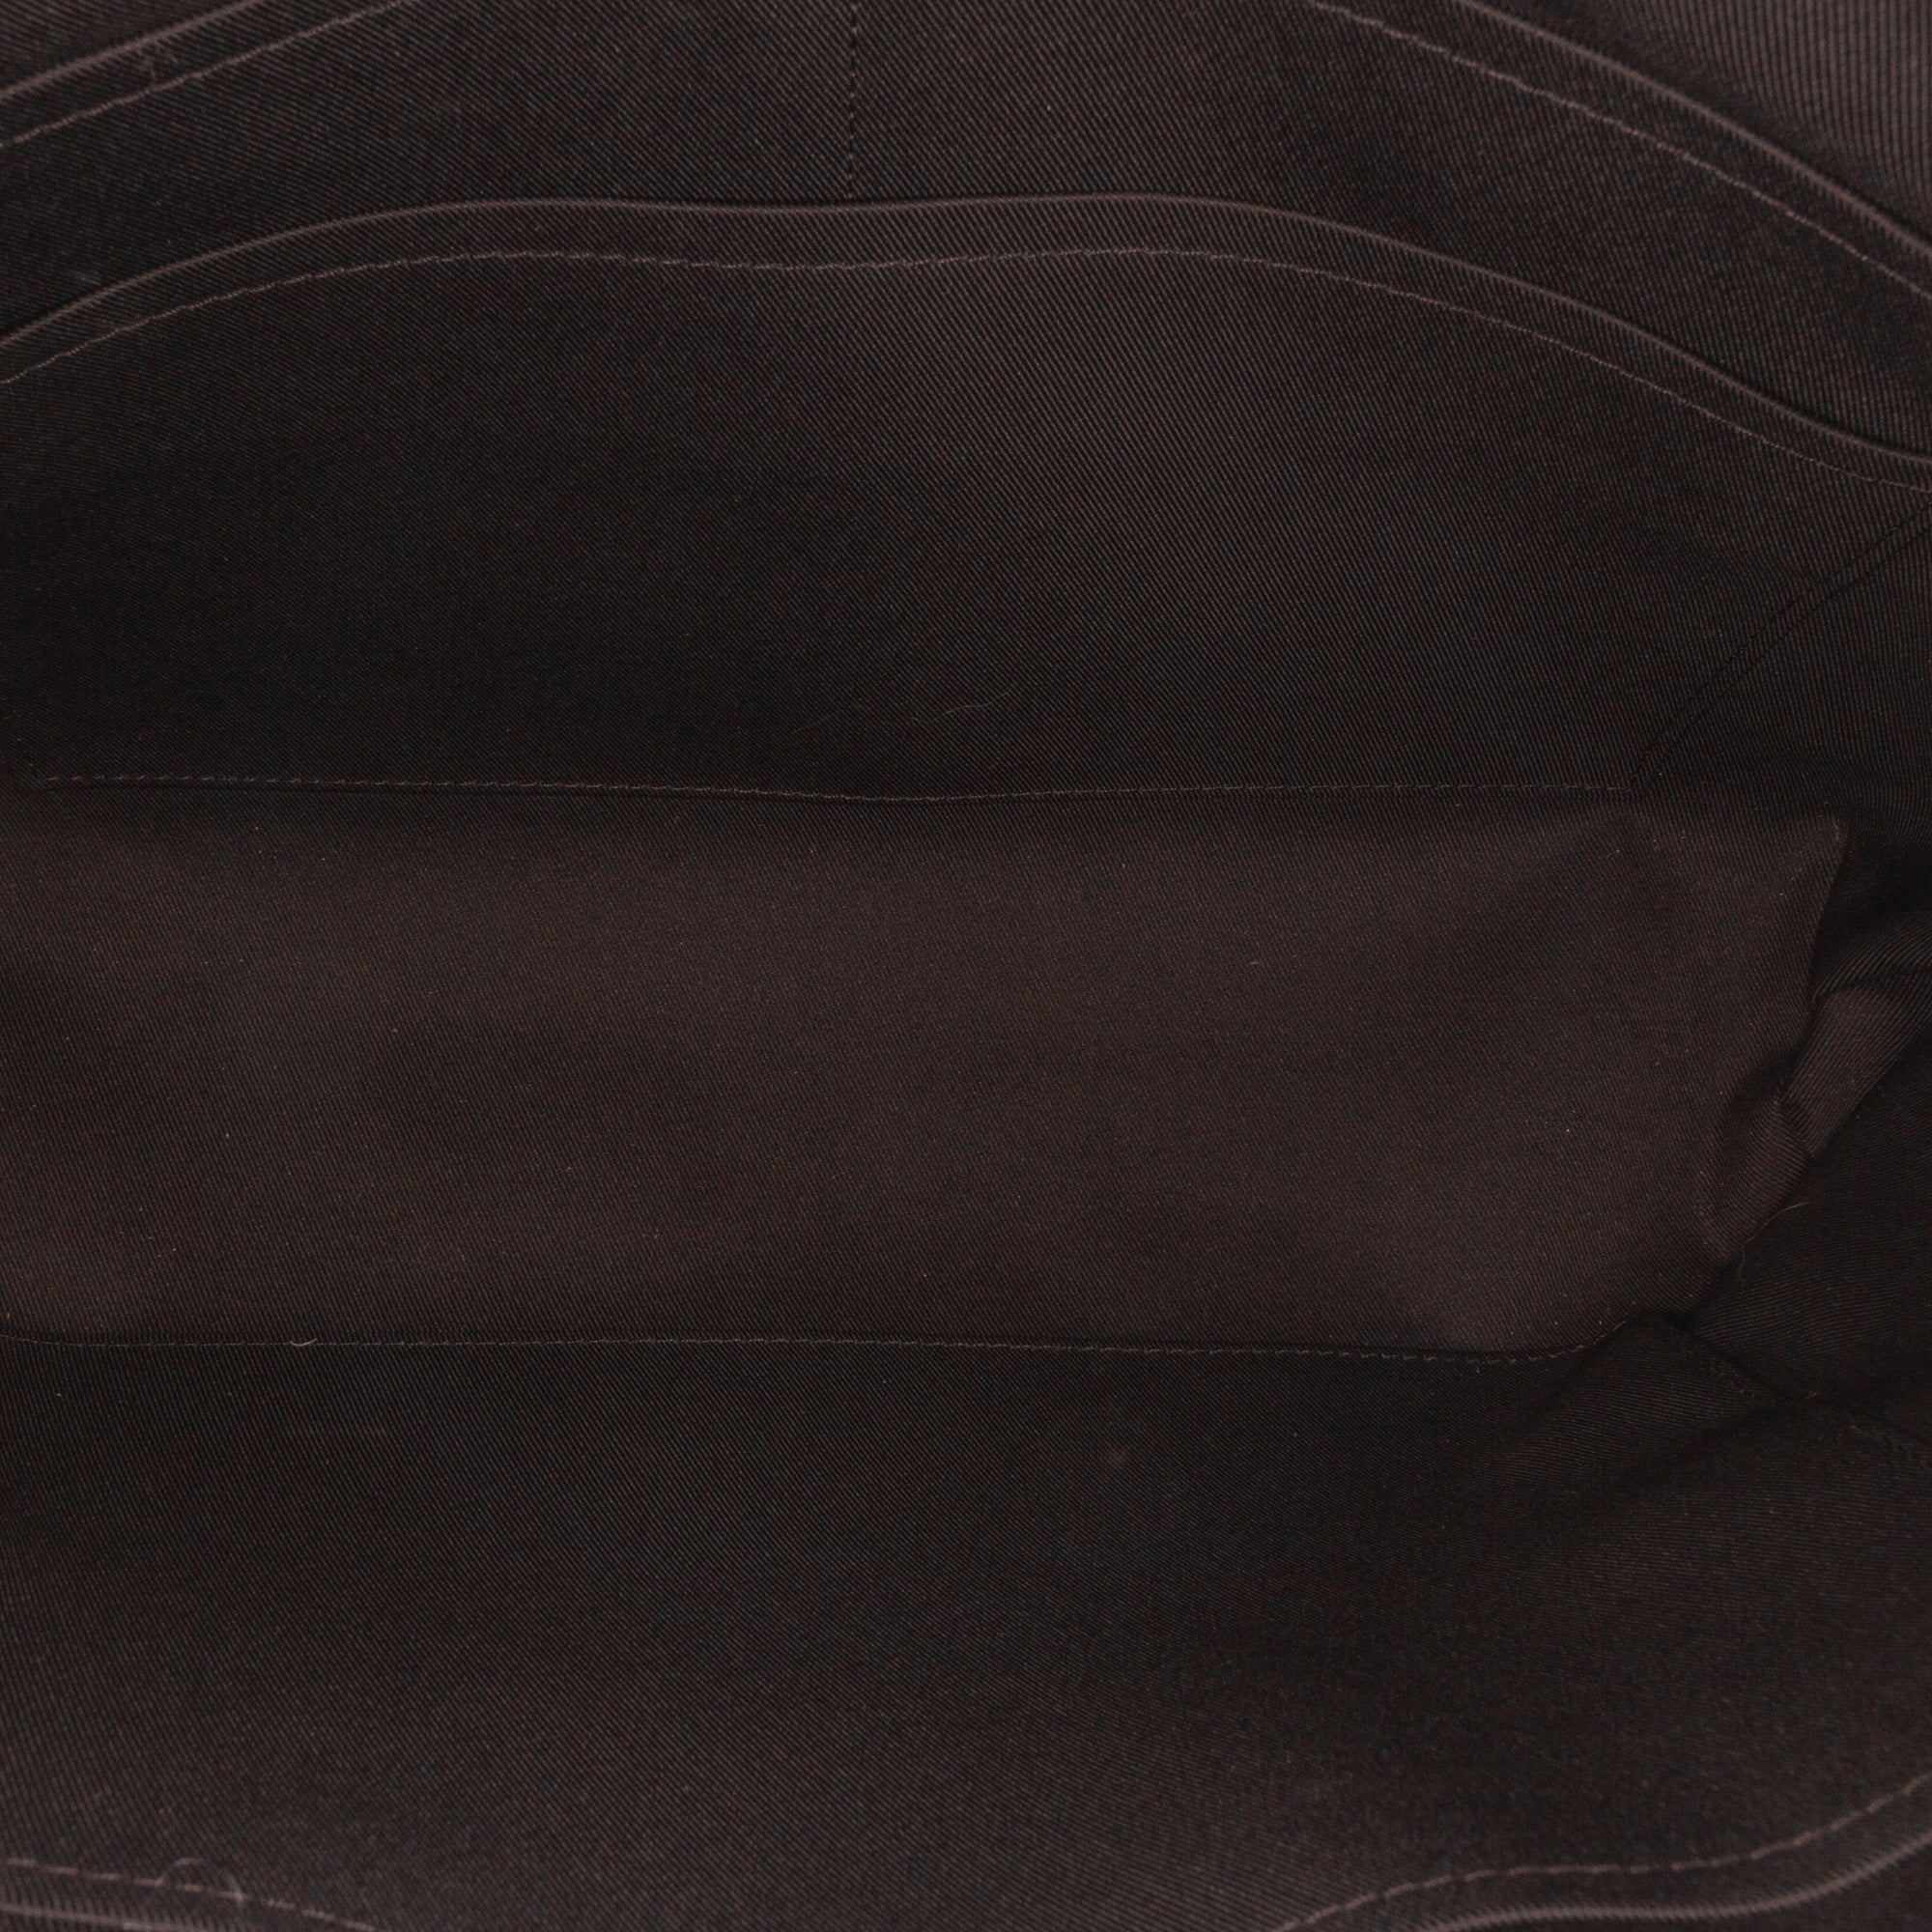 Louis Vuitton Briefcase Explorer Monogram Eclipse Black/Grey